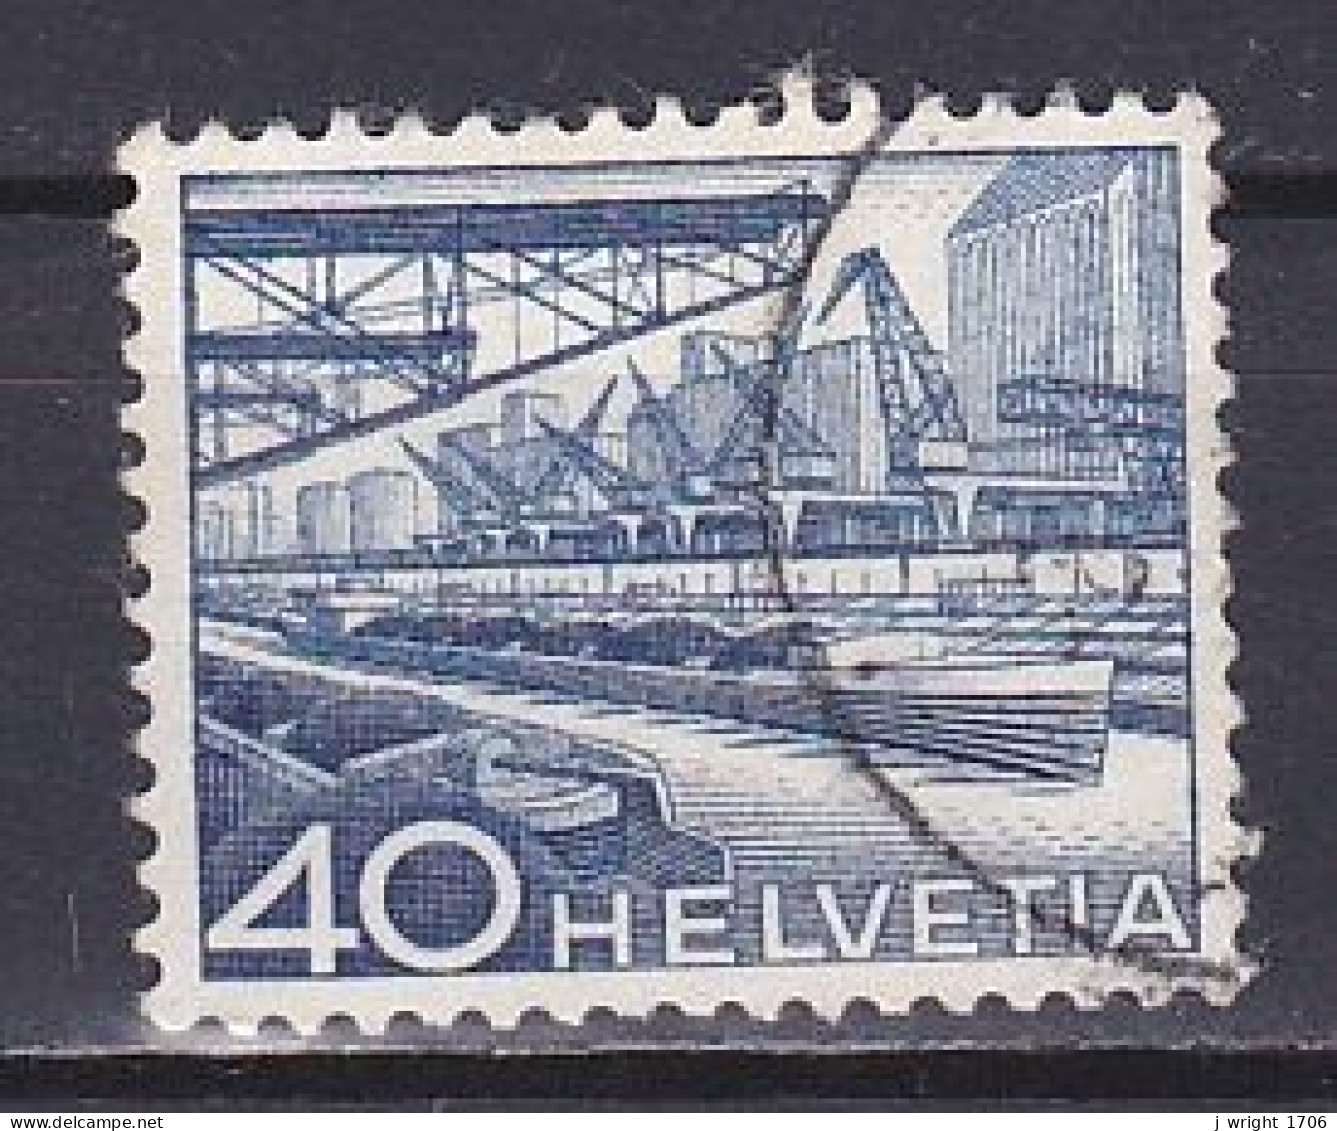 Switzerland, 1949, Landscapes & Technology/Basel Rhine Harbour, 40c, USED - Oblitérés